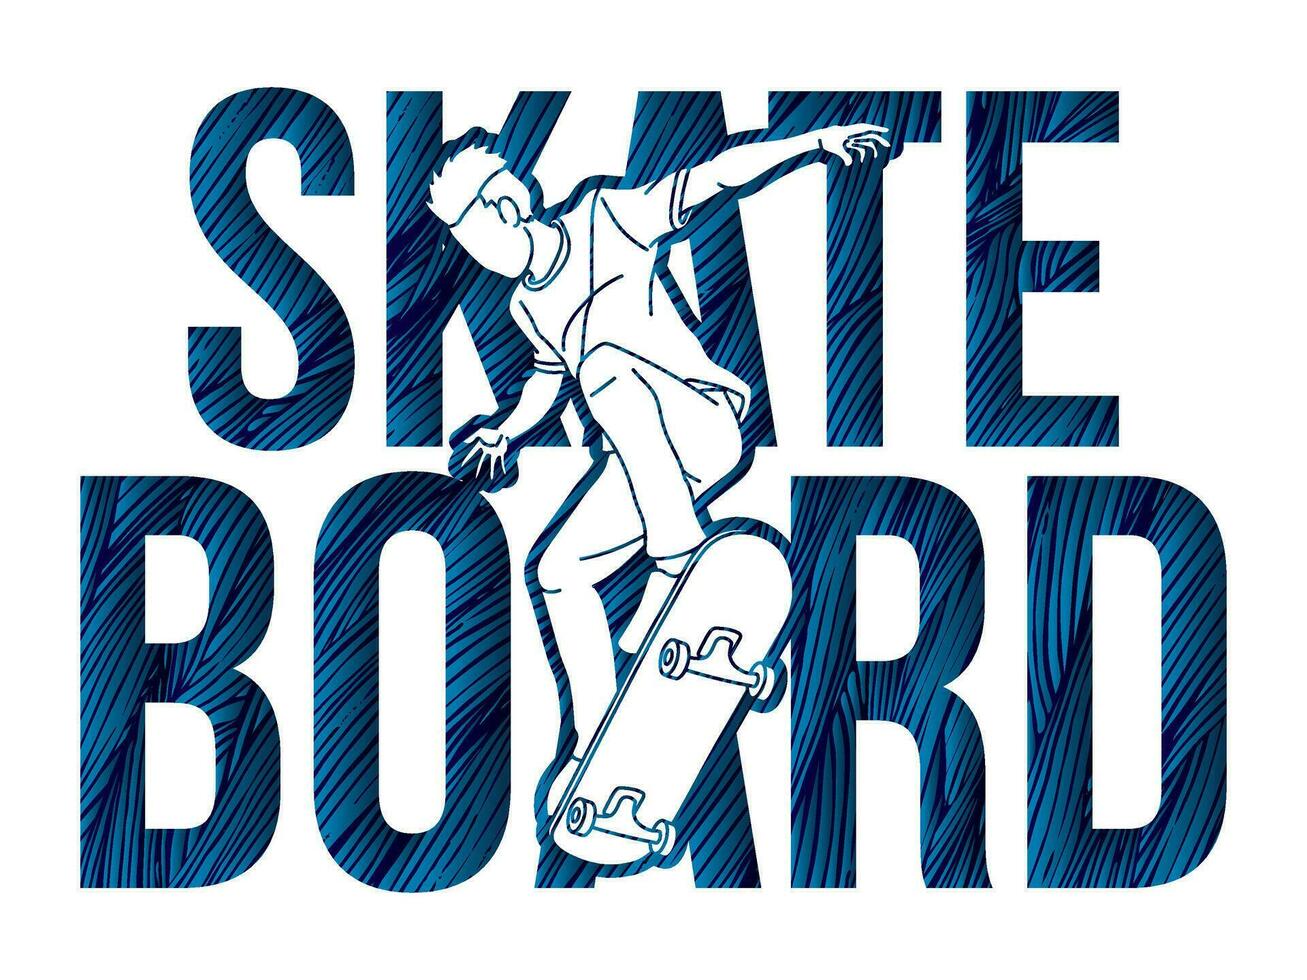 skateboard text designad med manlig spelare tecknad serie extrem sport grafisk vektor